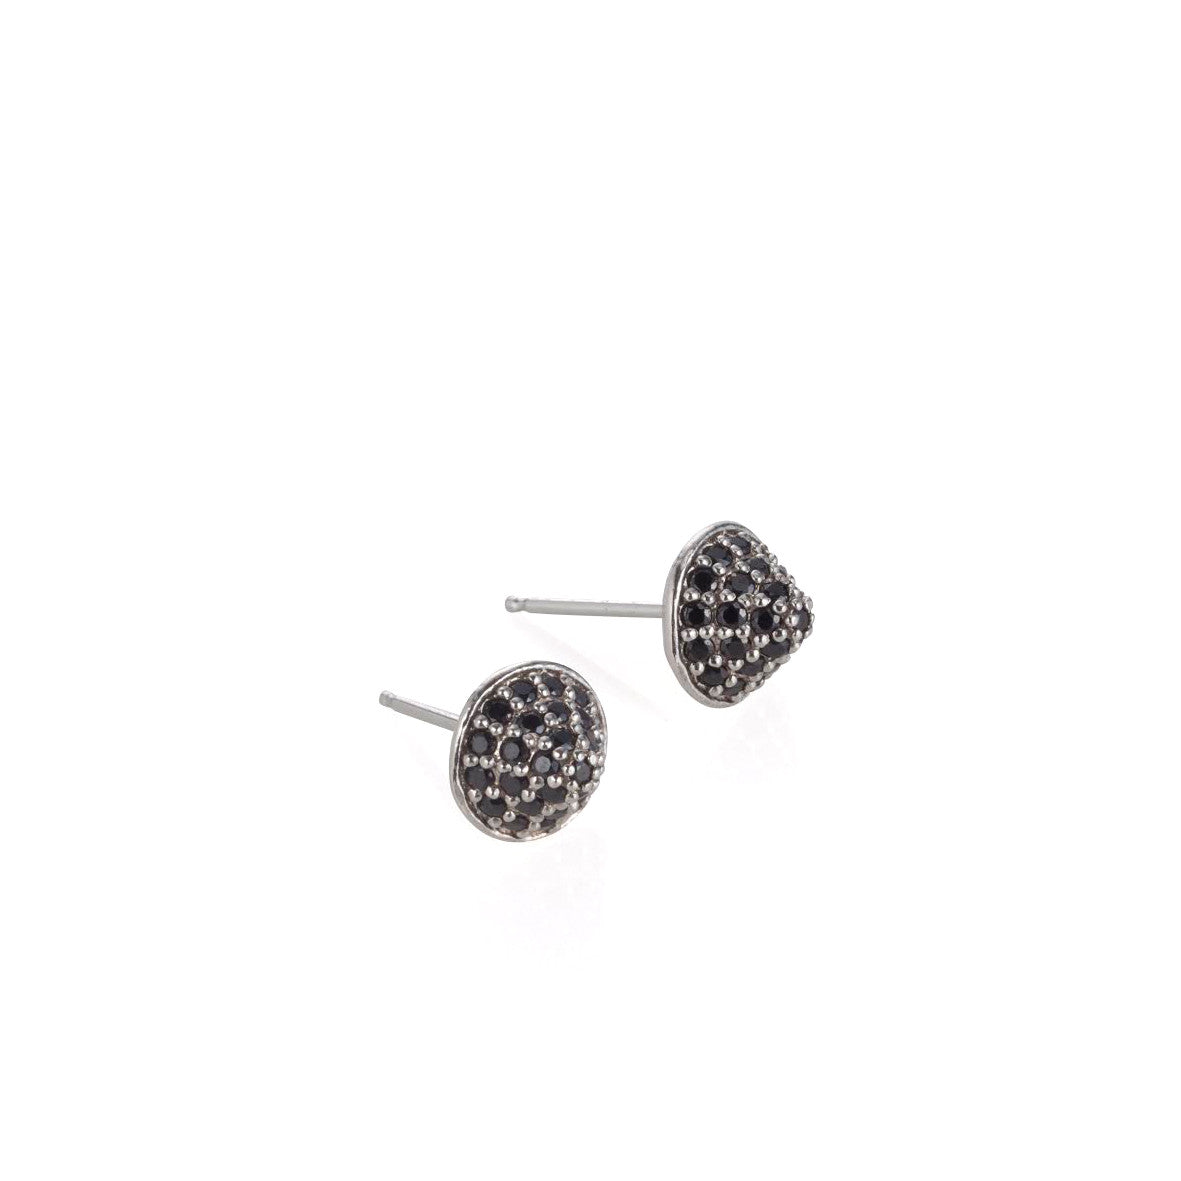 Silver stud earrings set with black stones